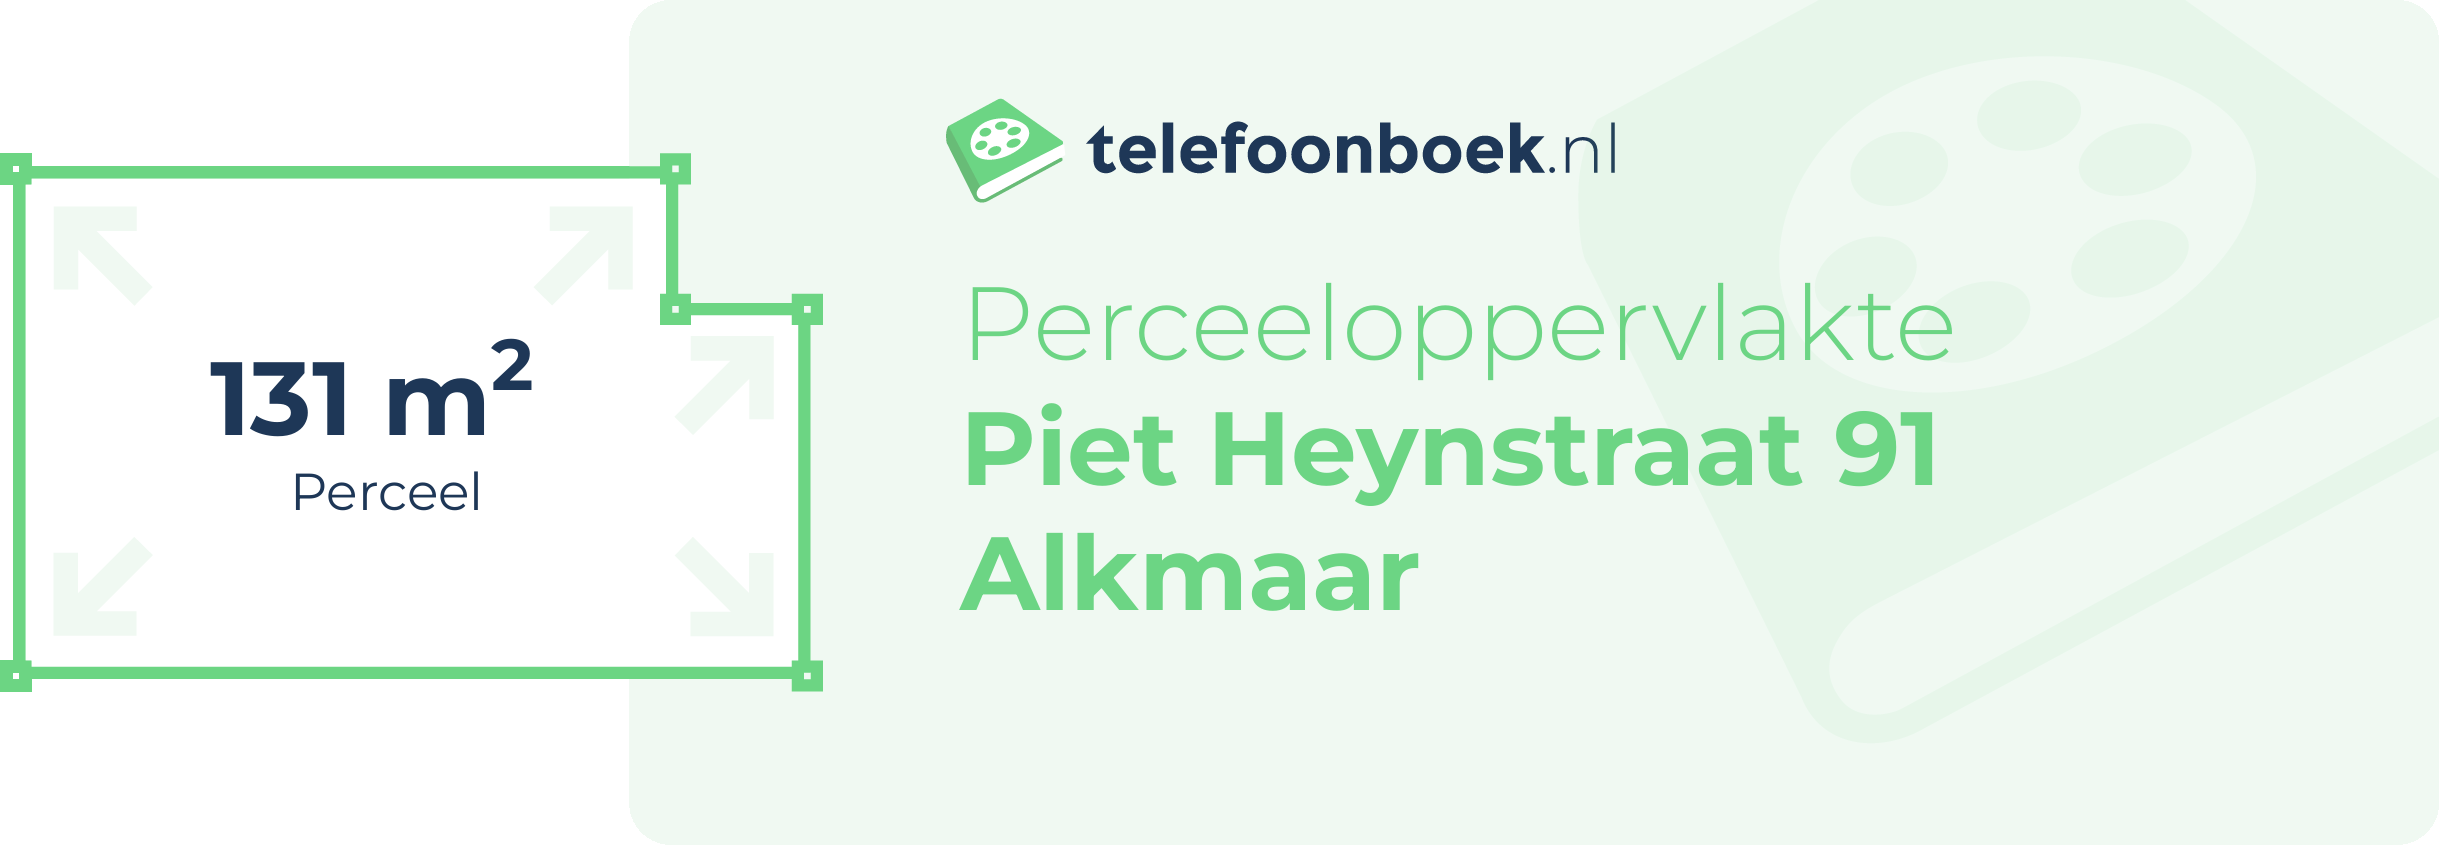 Perceeloppervlakte Piet Heynstraat 91 Alkmaar